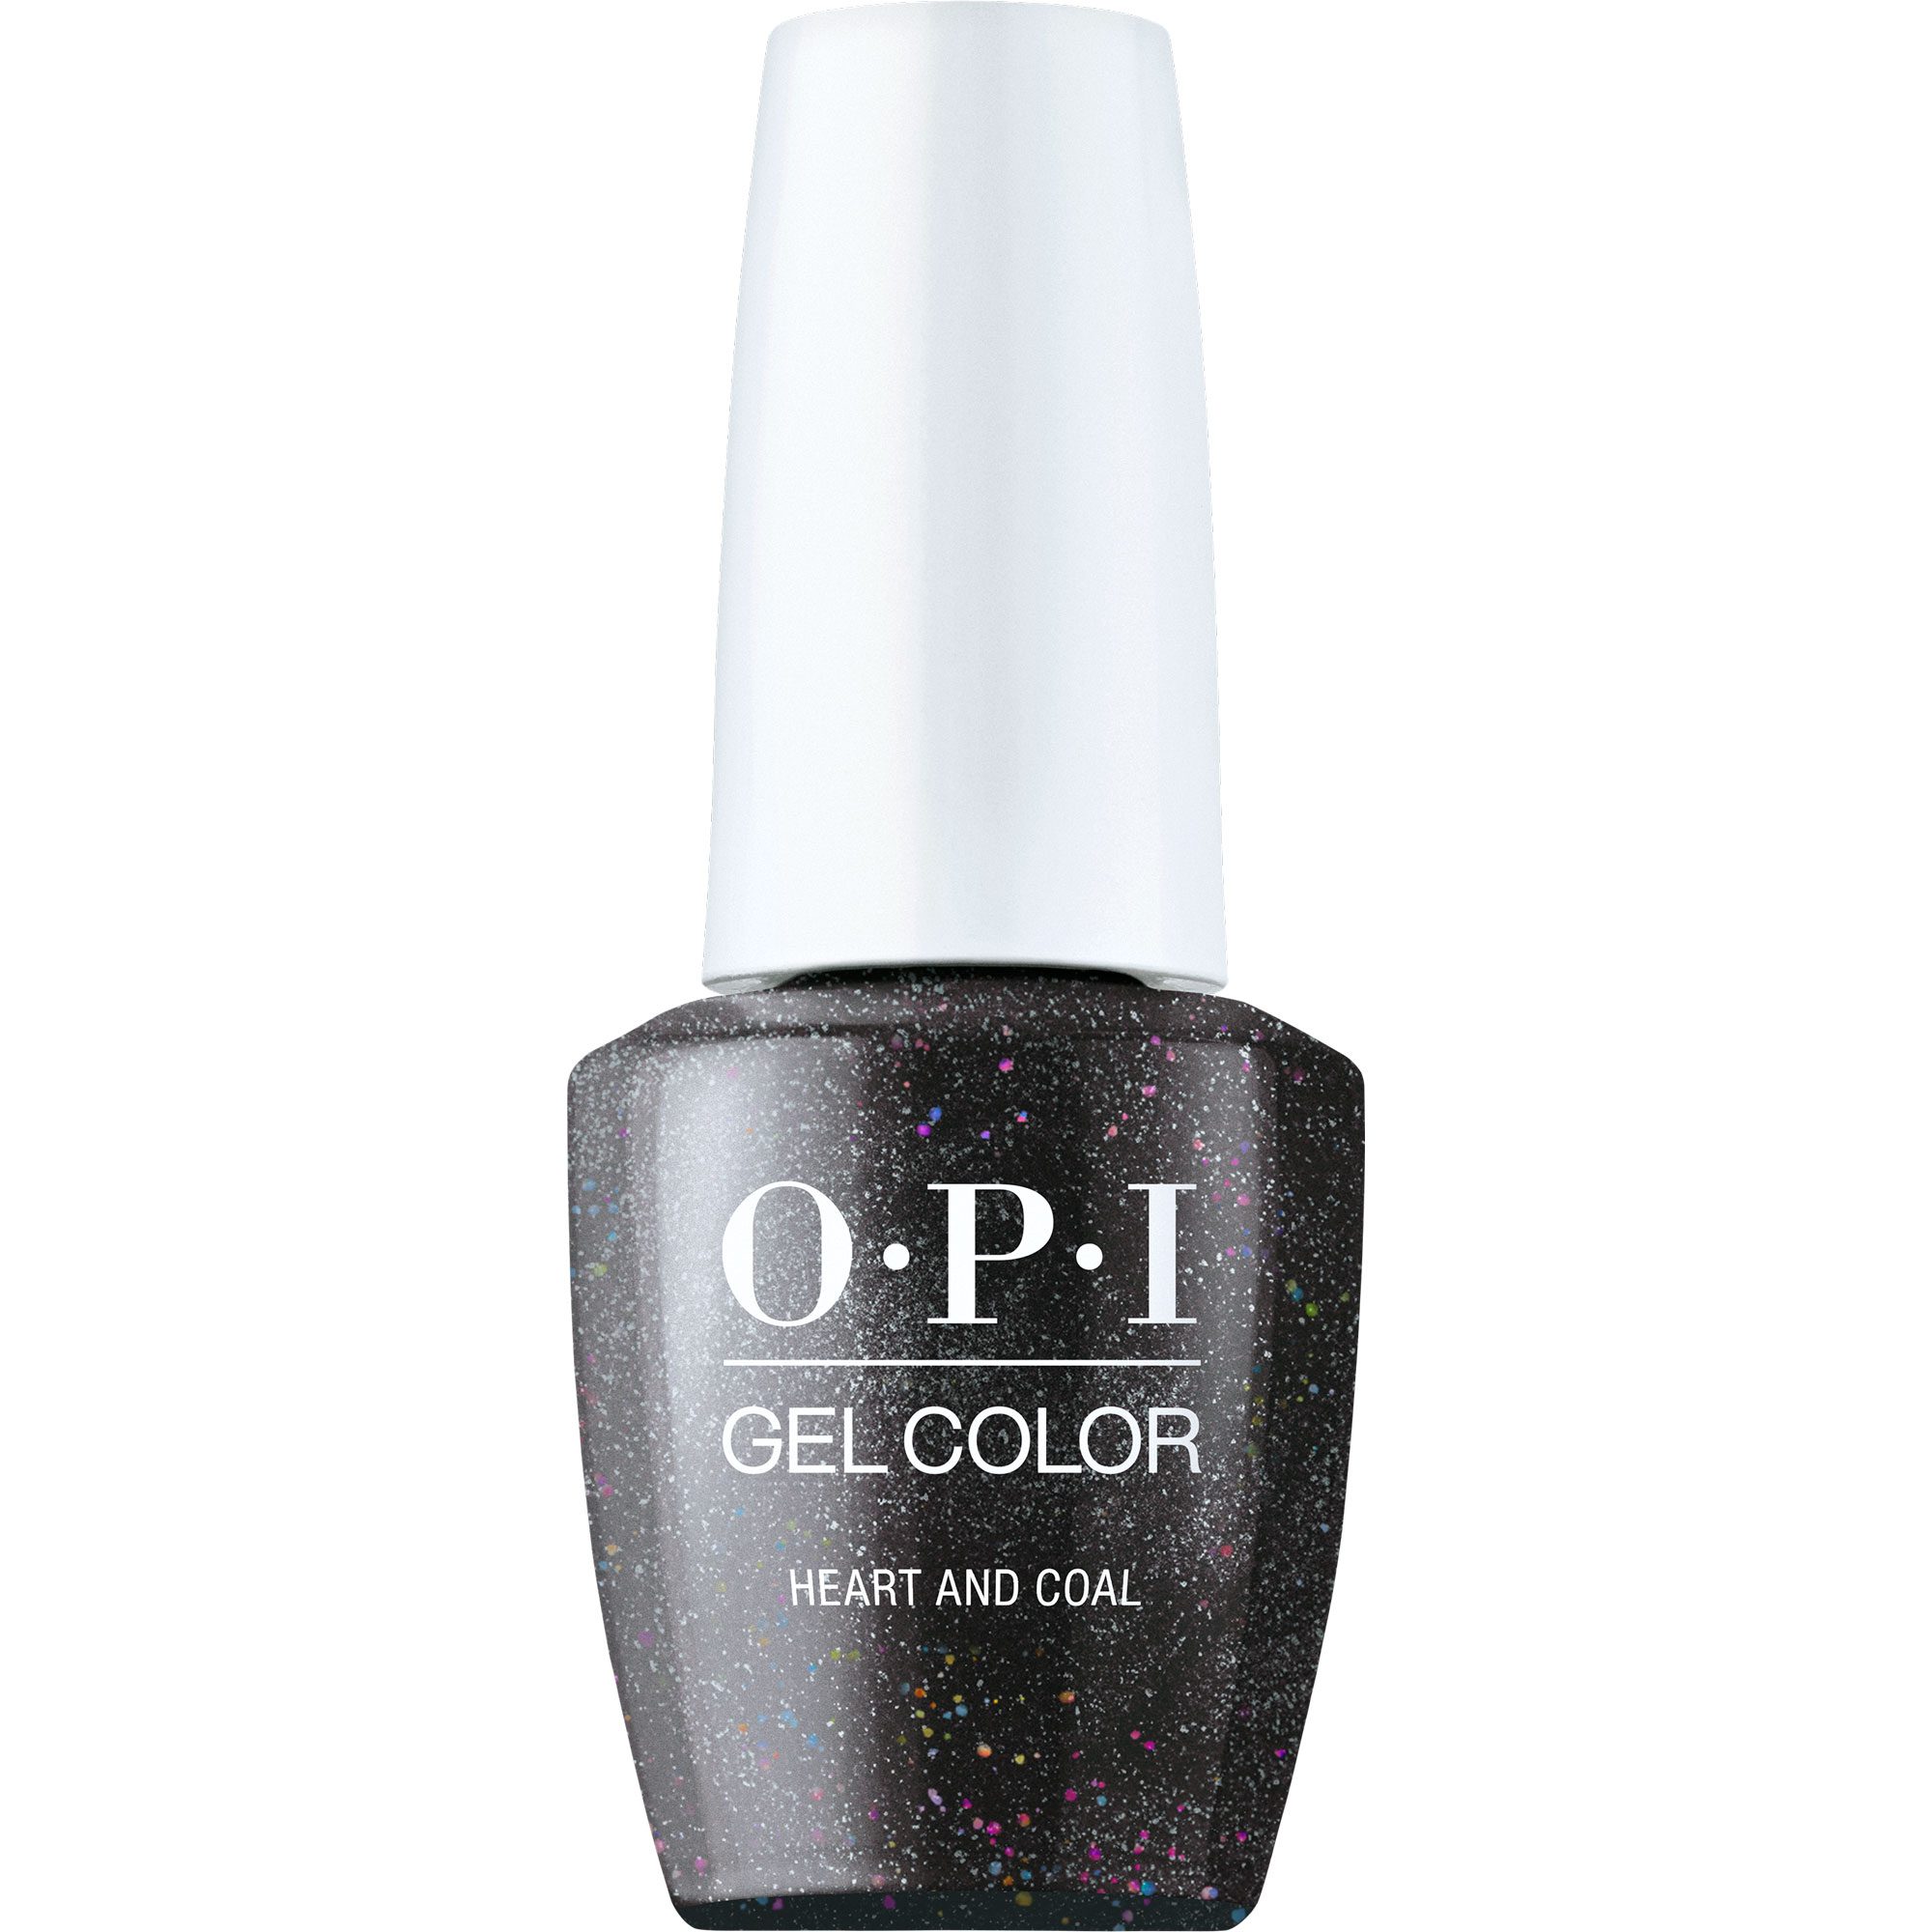 OPI Nail Polish Gel Color 360 - Heart and Coal  oz | Ethos Beauty  Partners